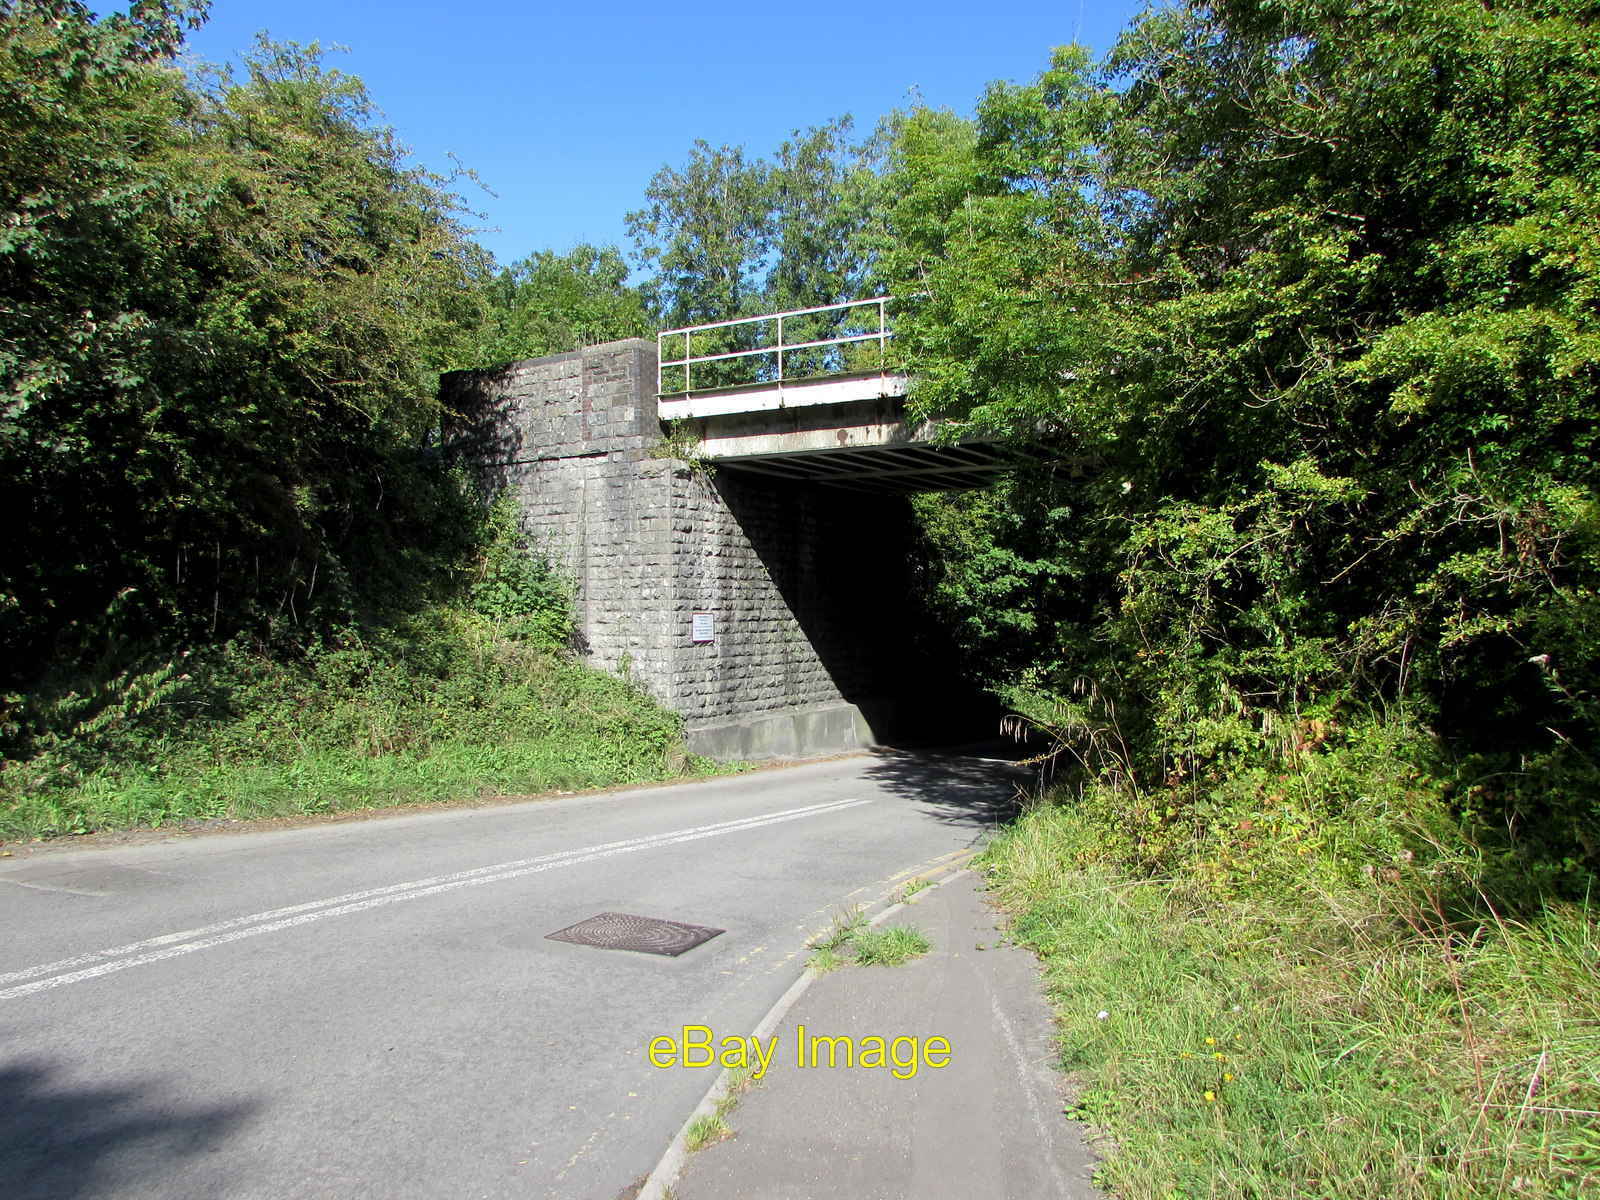 Photo 12x8 South side of Four Cross railway bridge near St Athan Boys Vill c2019